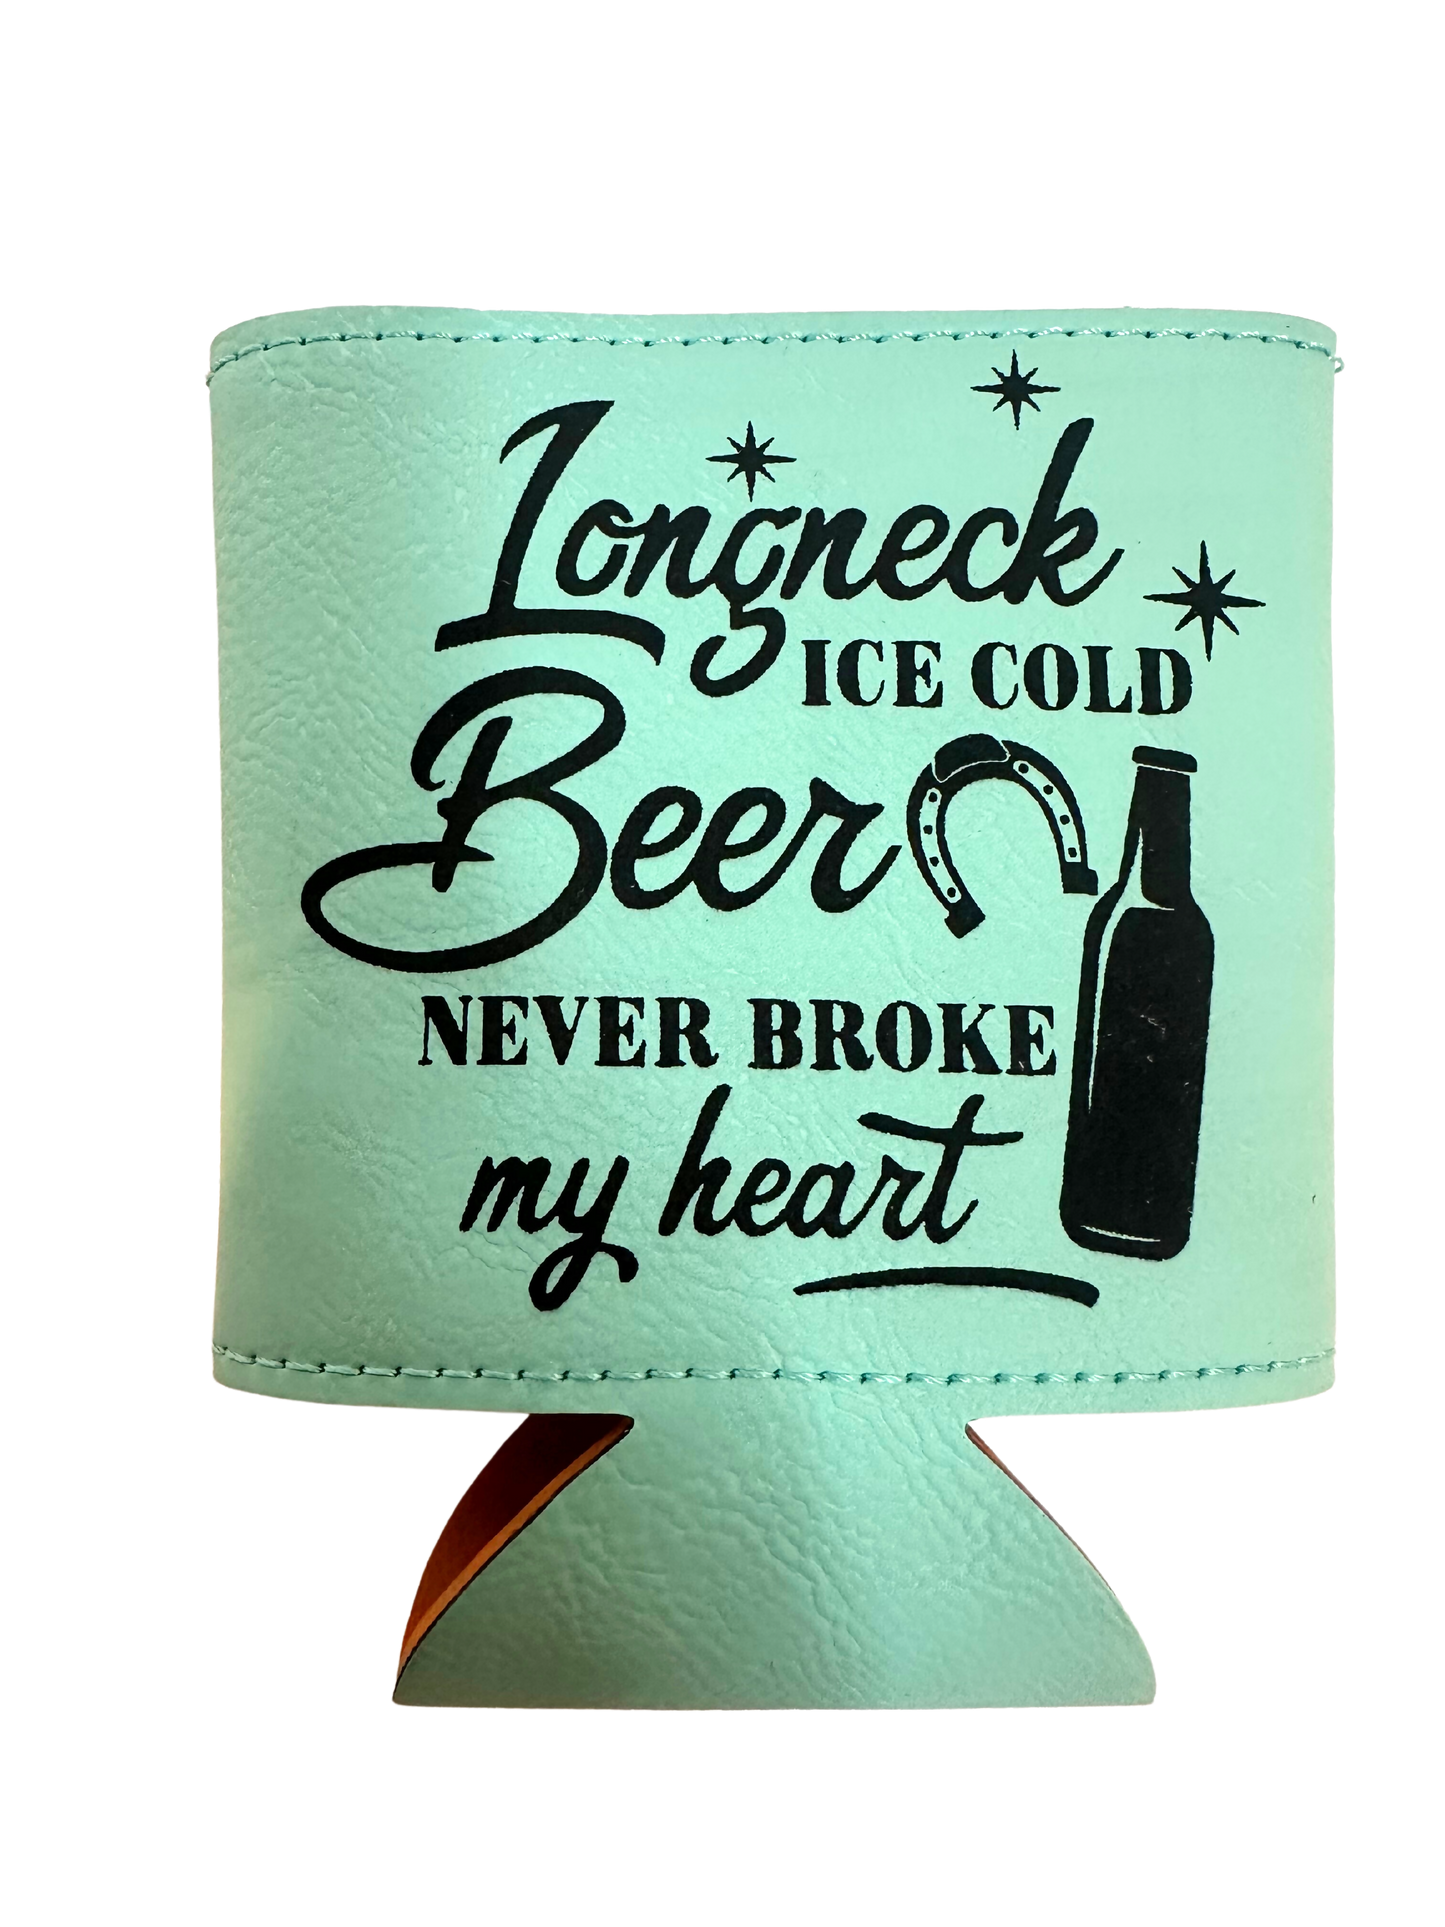 Beer never broke my heart koozie